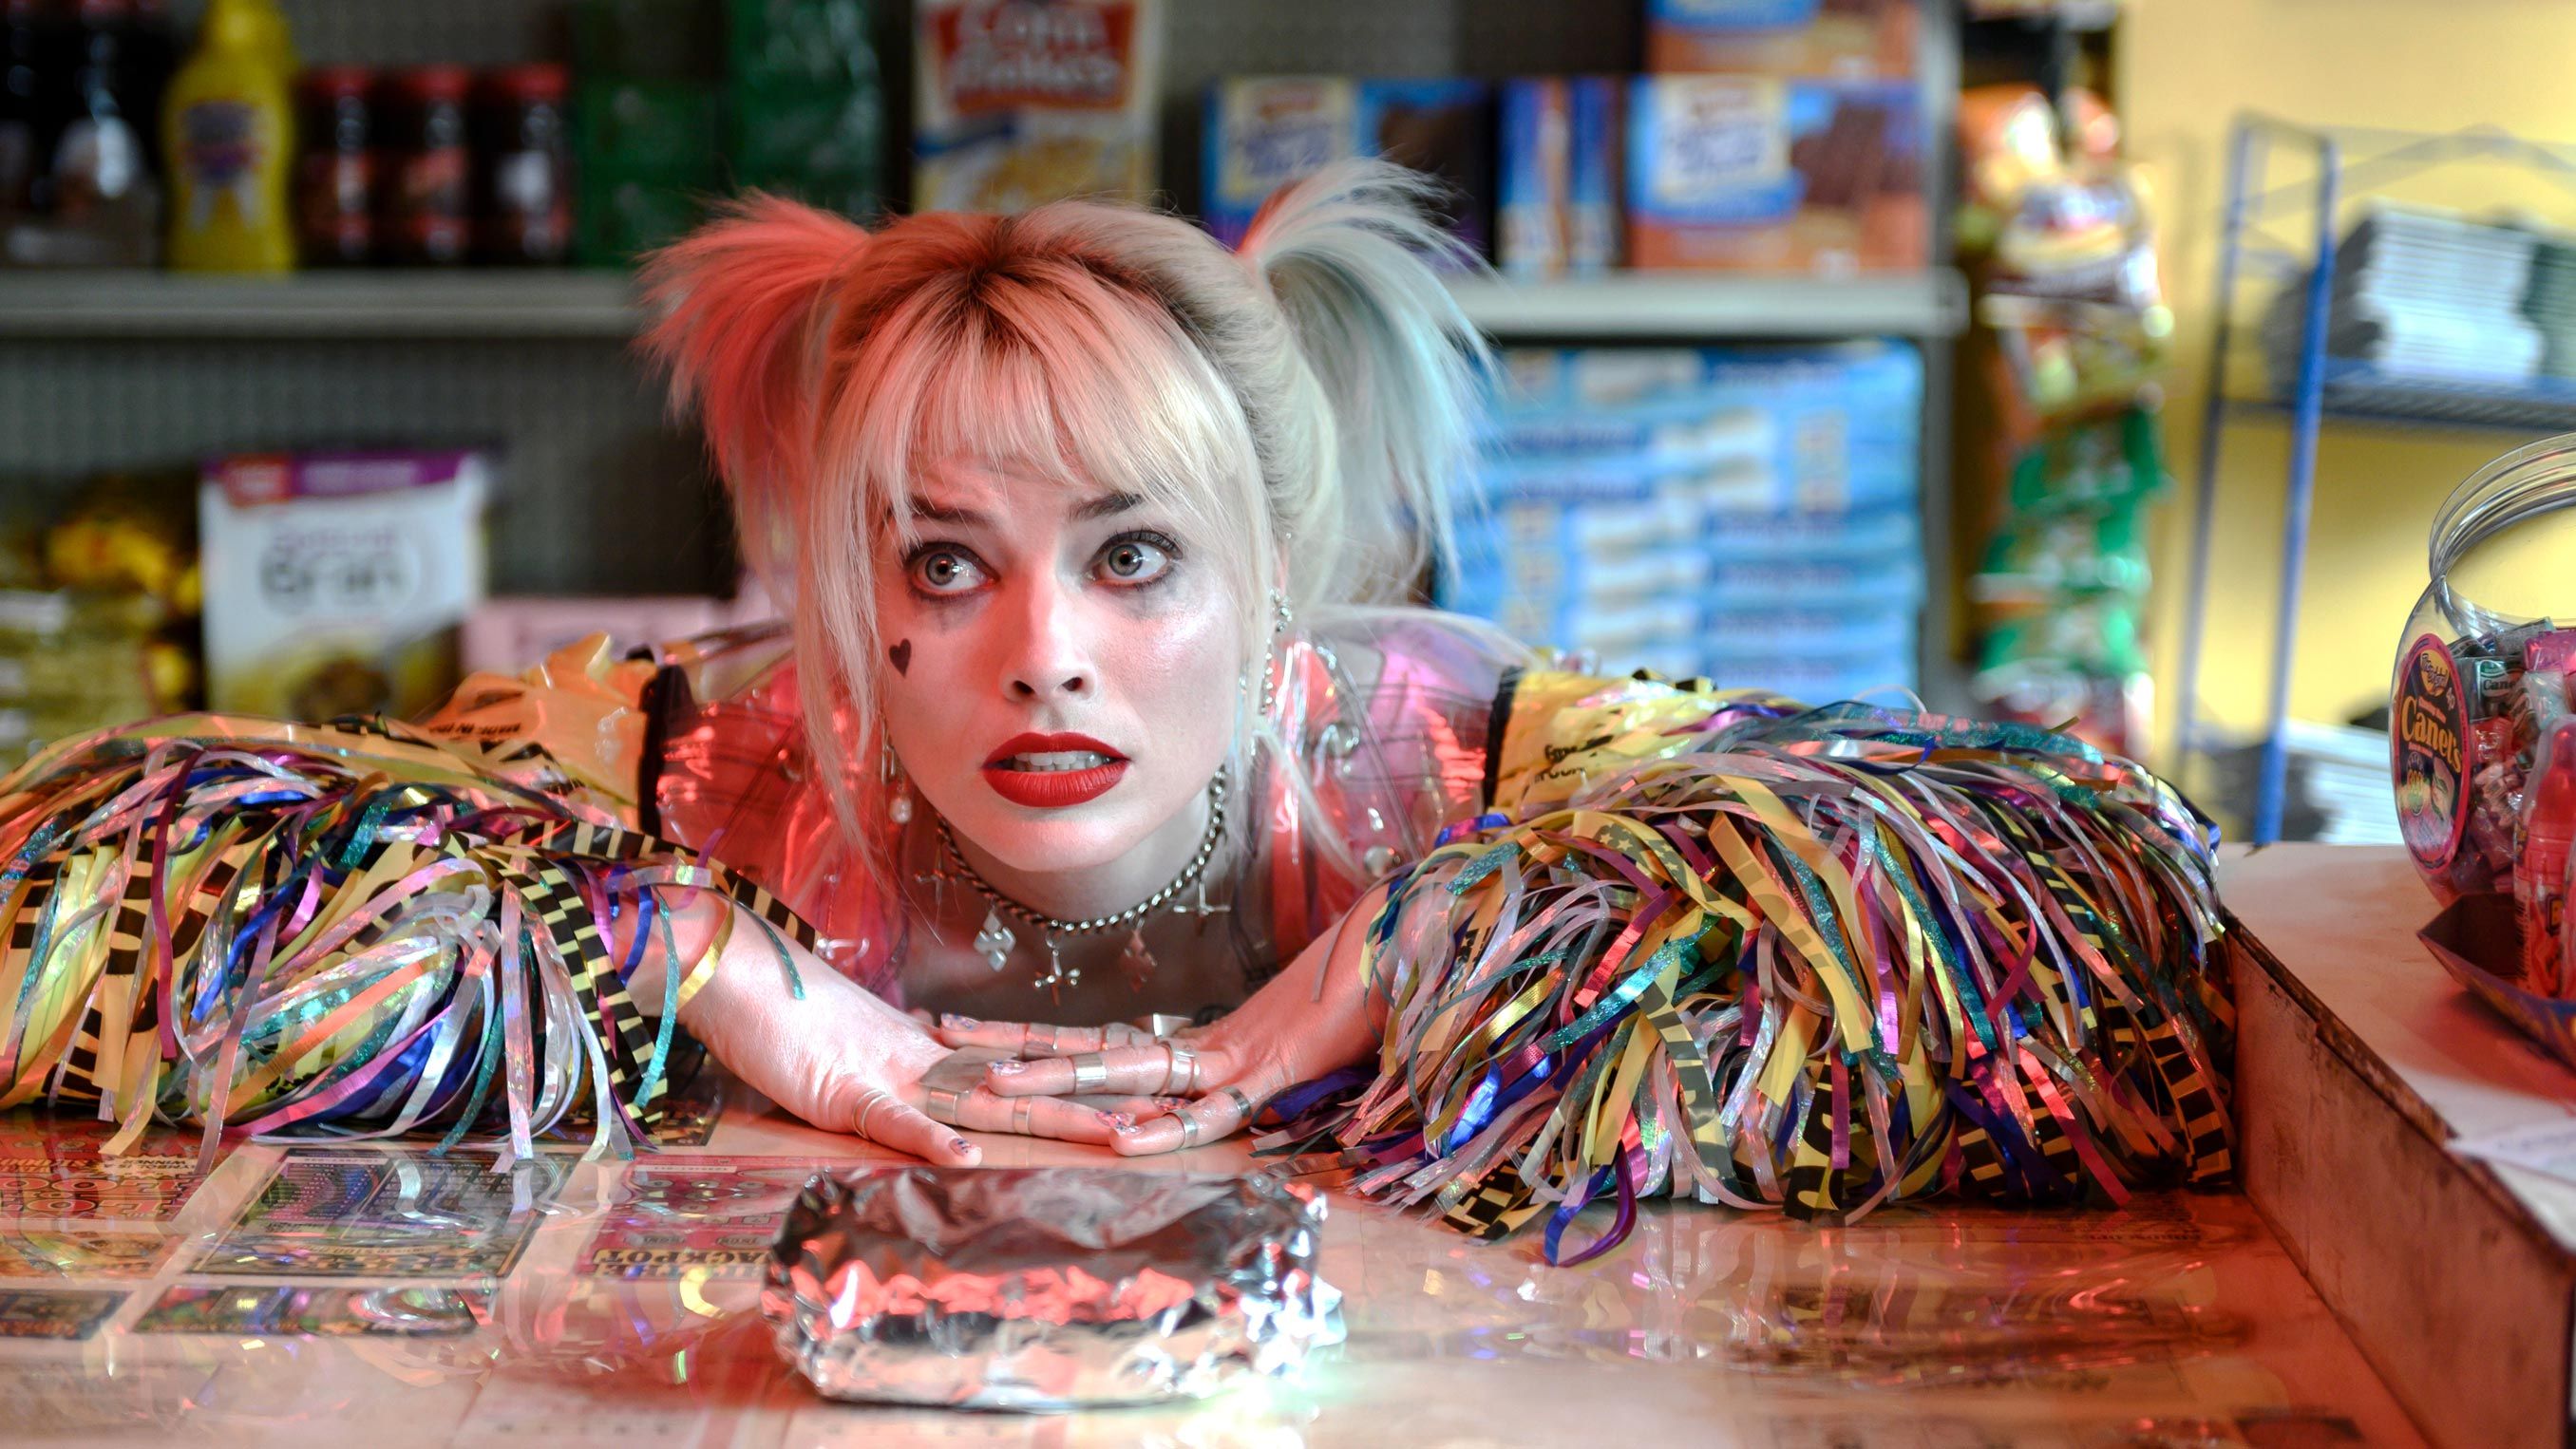 Margot Robbie's Harley Quinn Return Teased By DC Director